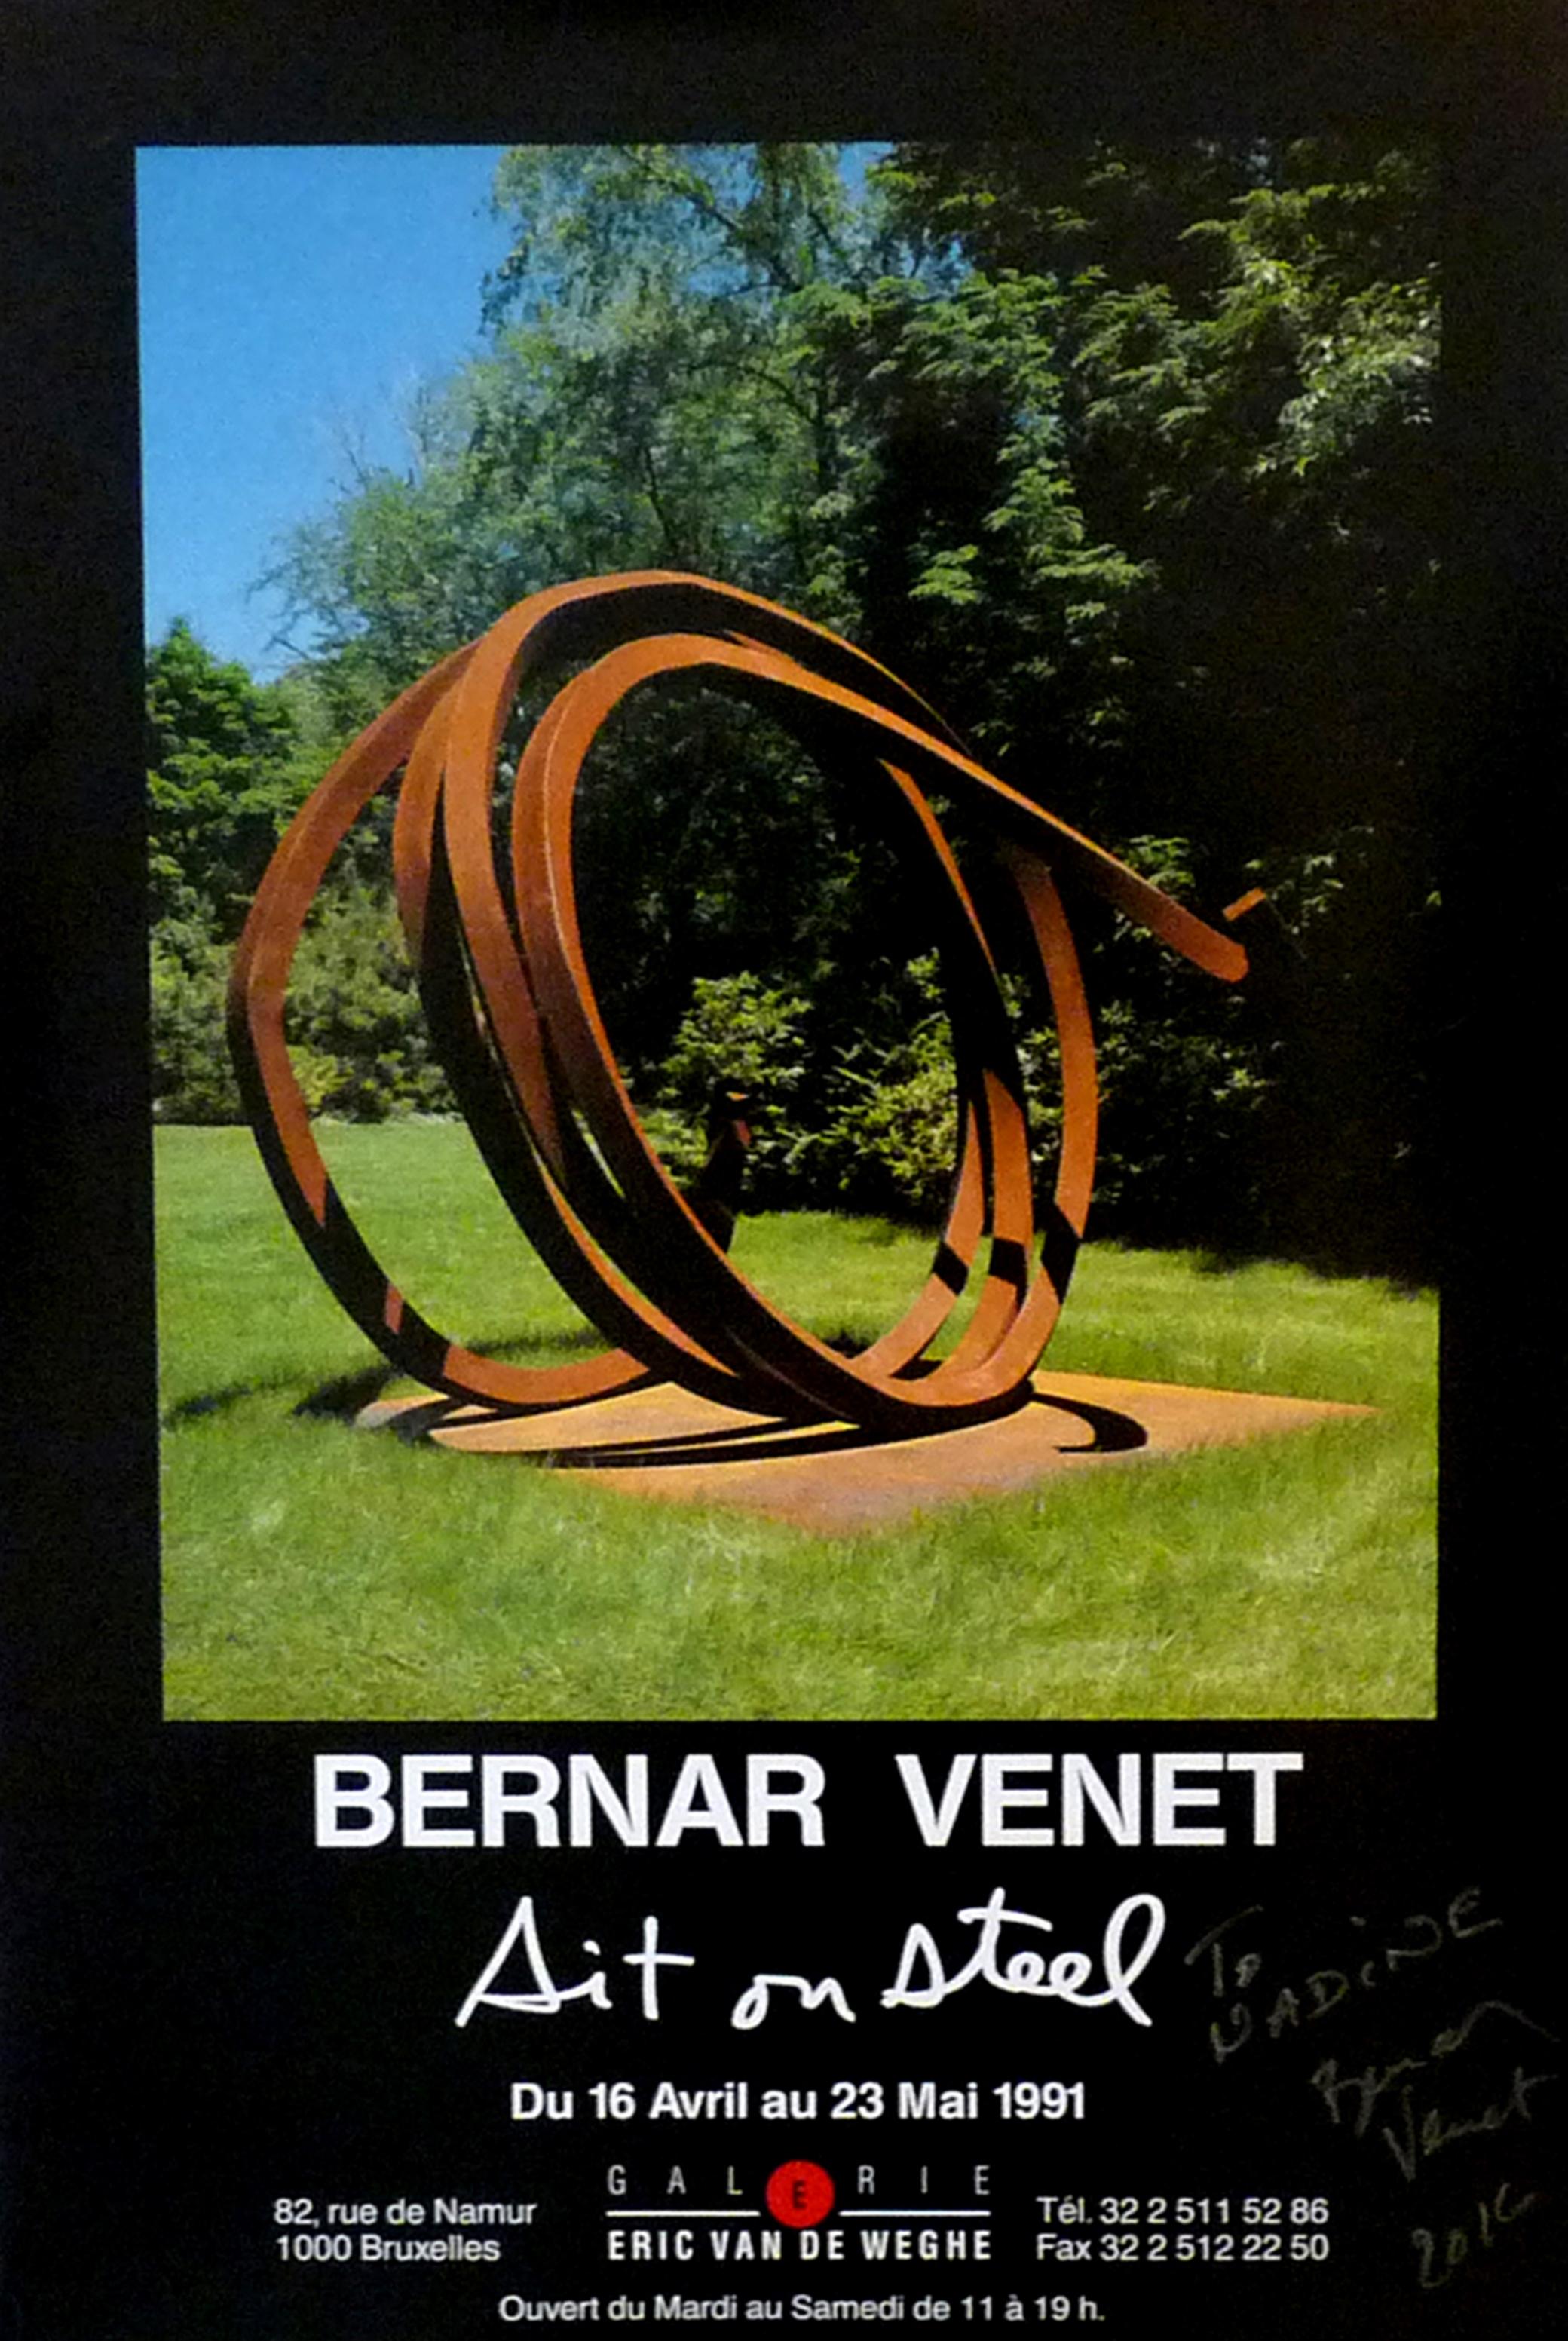 Bernar Venet Landscape Print - Sit on Steel, European Minimalist poster, Hand Signed & Inscribed to Nadine